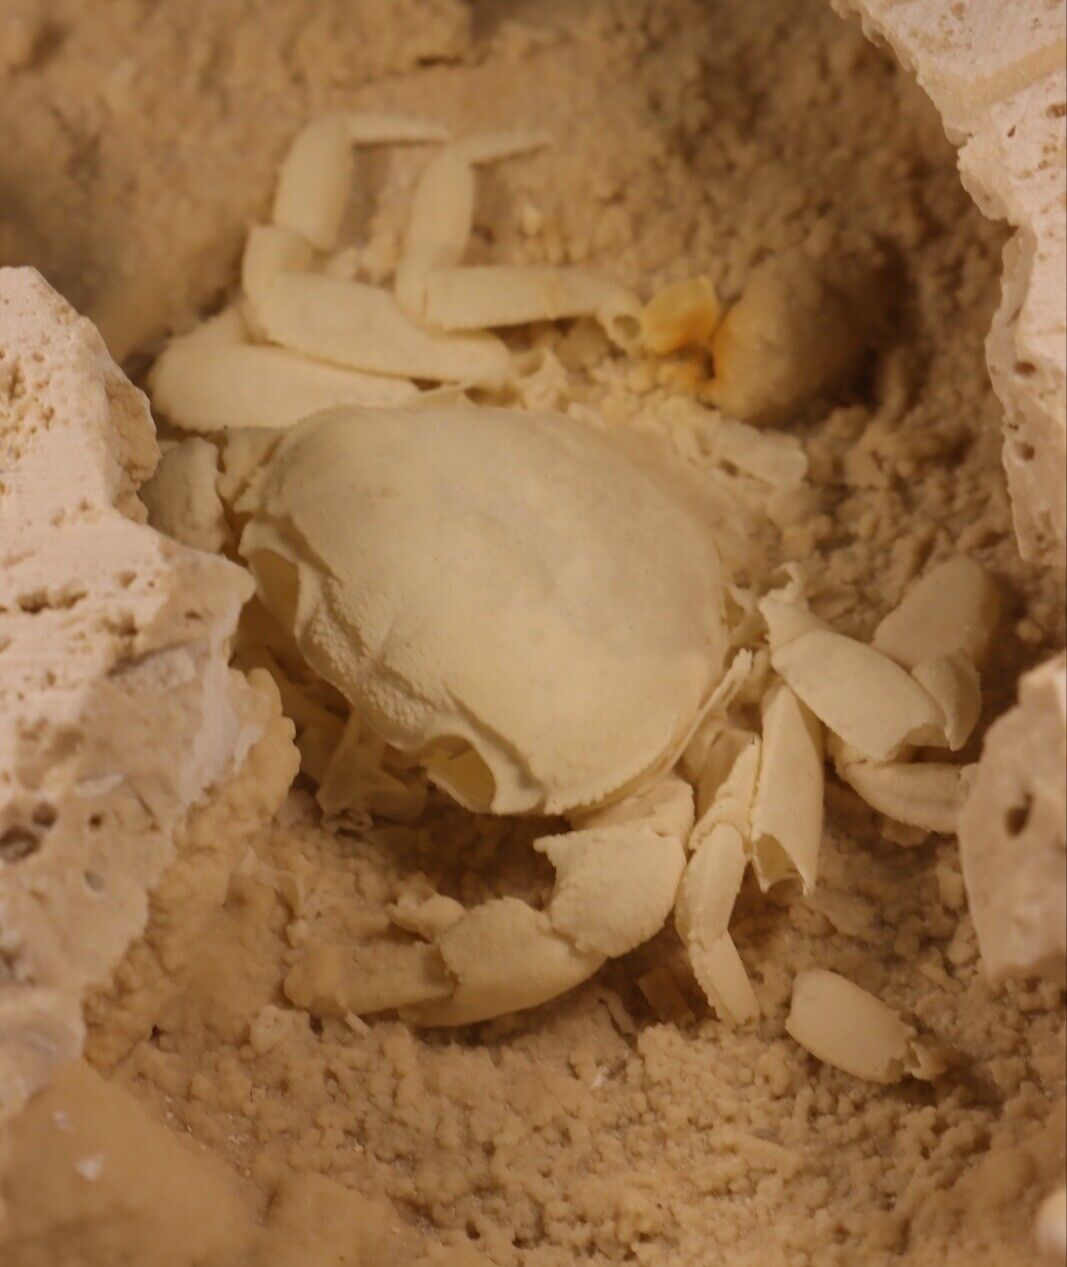 2 Inch Travertine Crab Fossil From Turkey, Fossil Travertine Crab Potamon